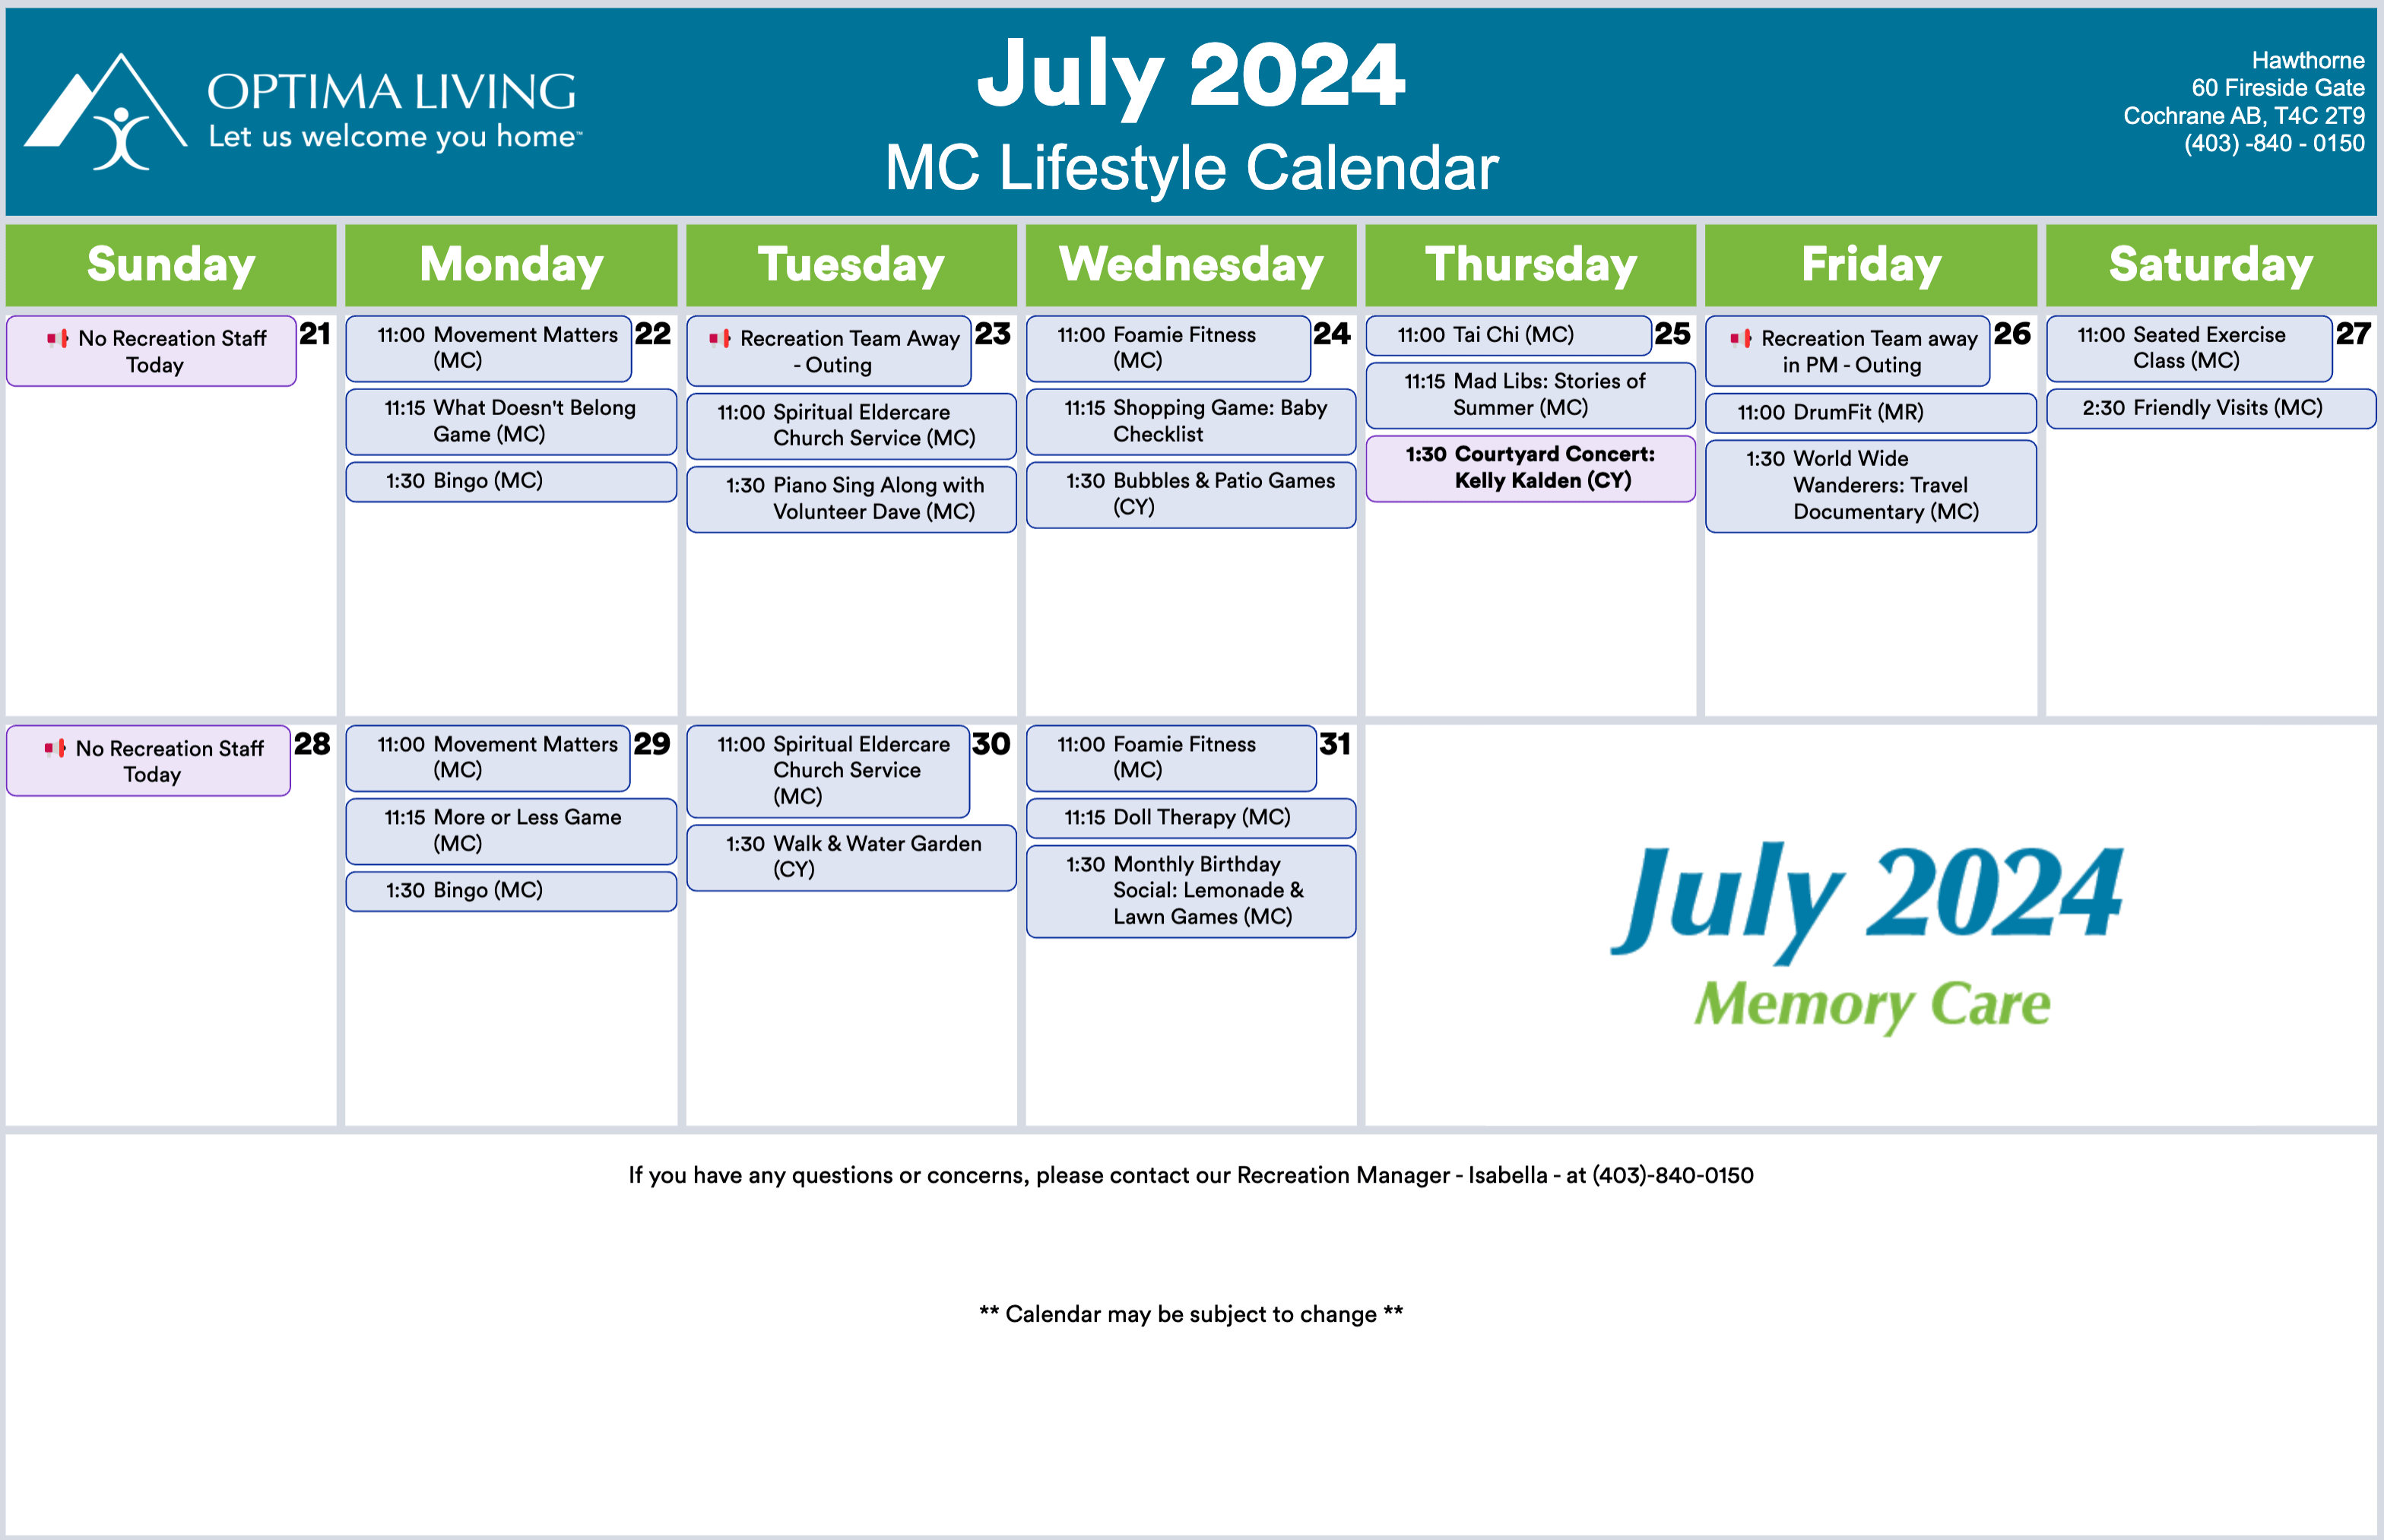 Hawthorne July 21 - 31 2024 Memory Care event calendar